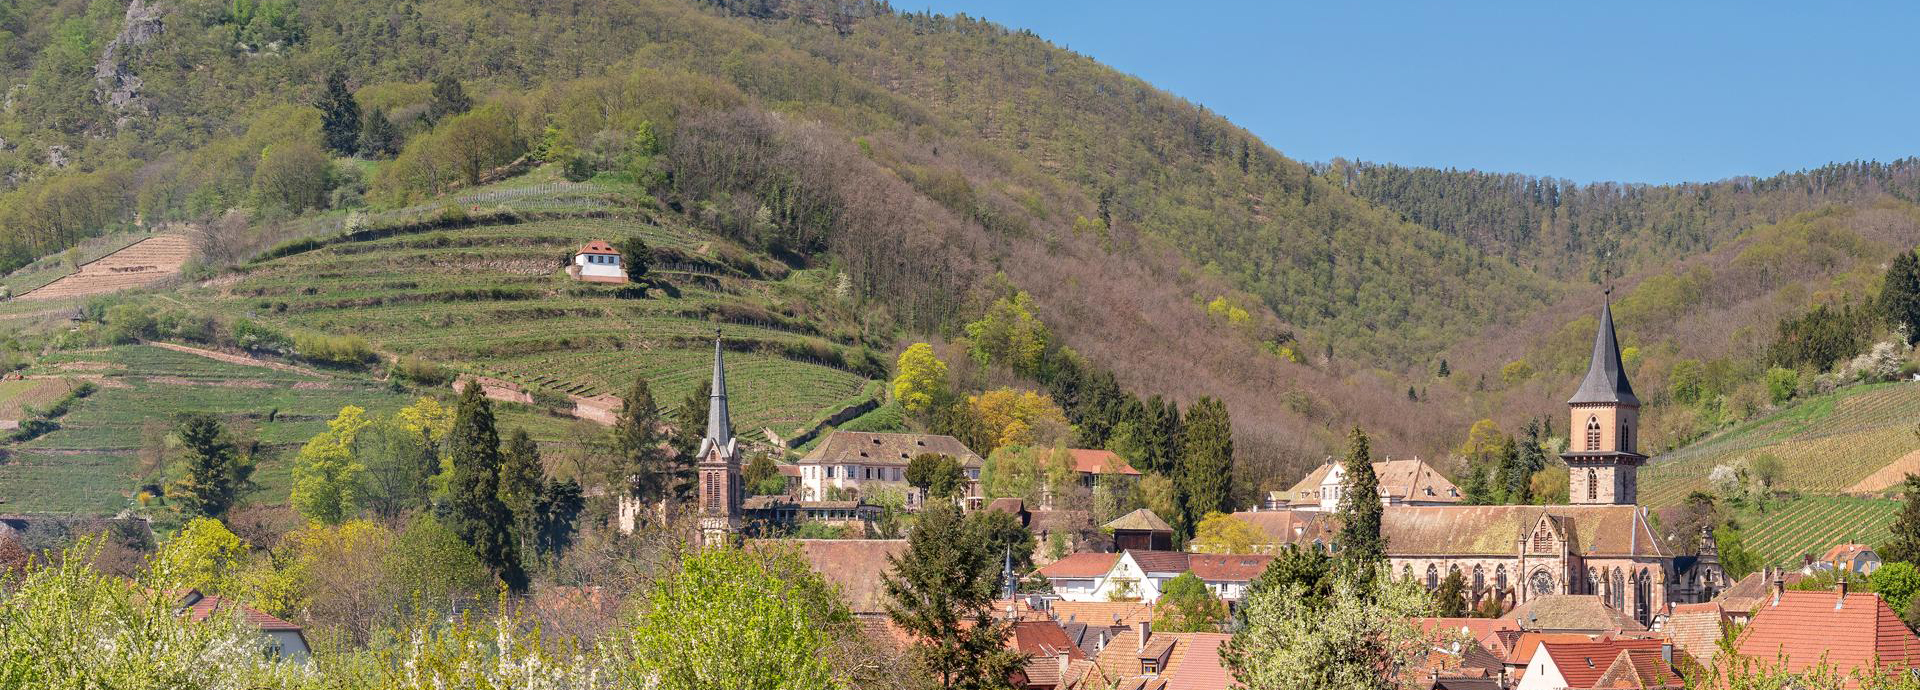 Ribeauvillé, village médiéval d’Alsace